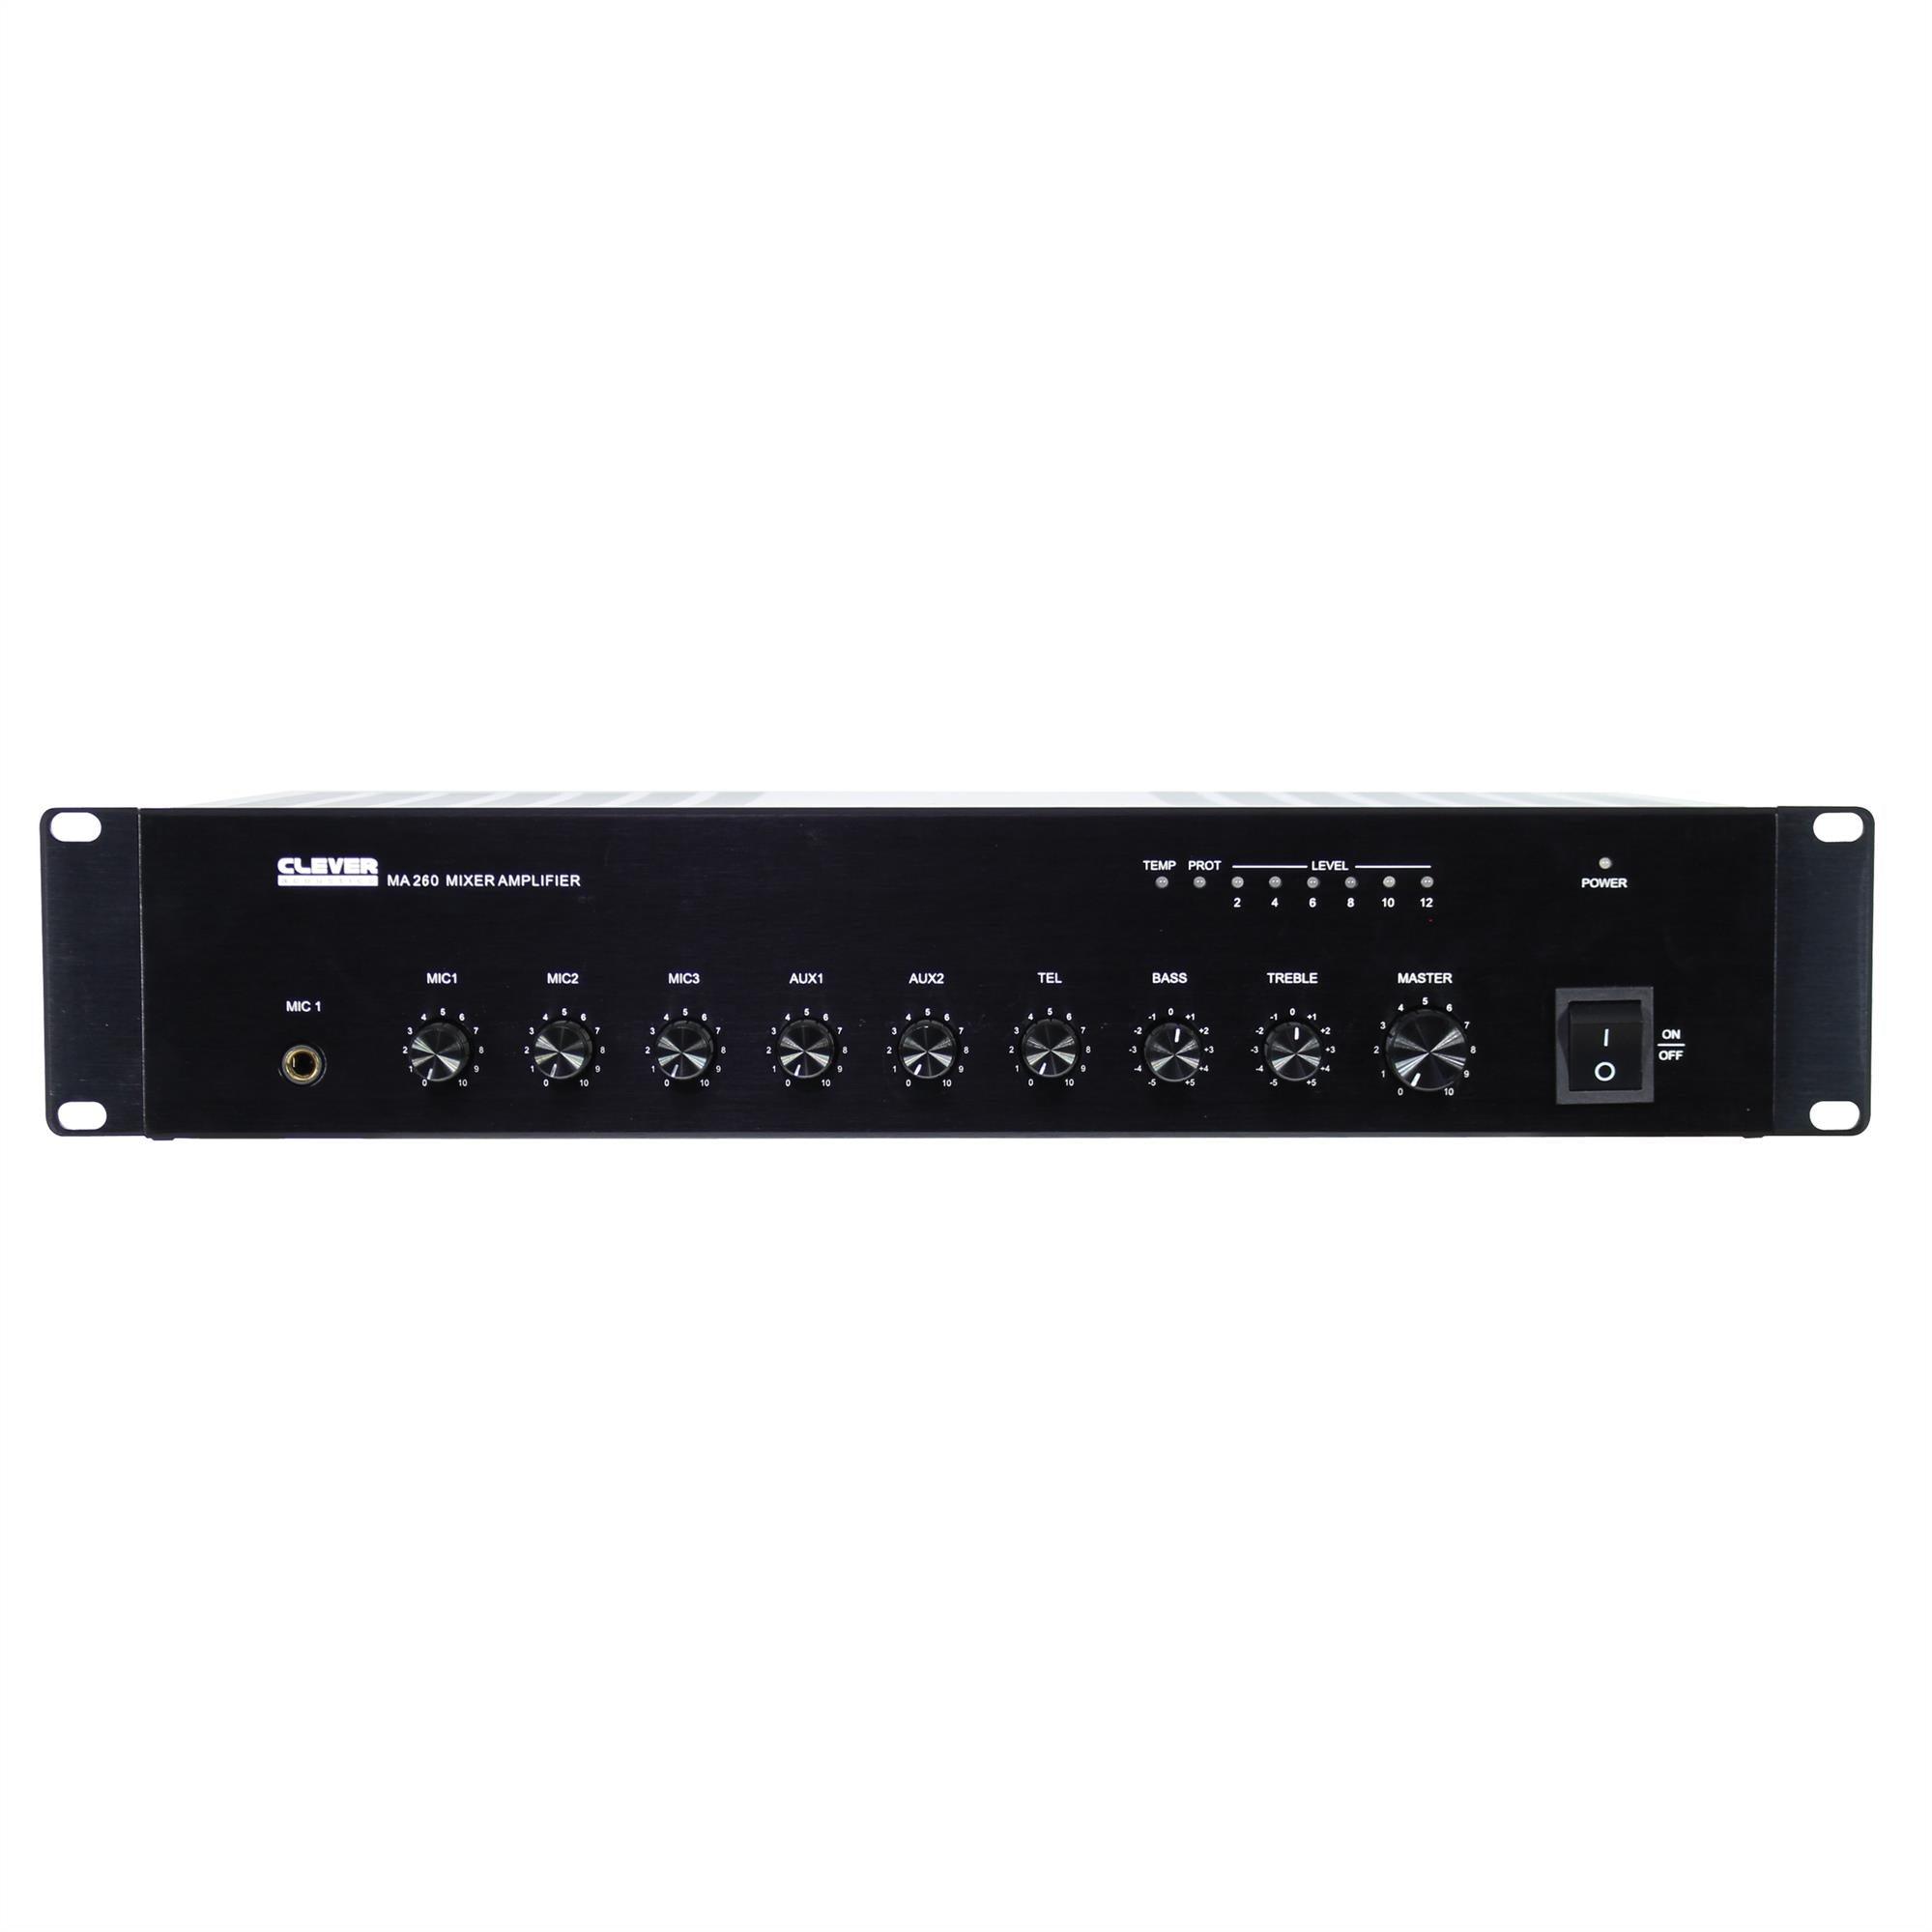 Clever Acoustics MA 260 100v 60w Mixer Amplifier - DY Pro Audio